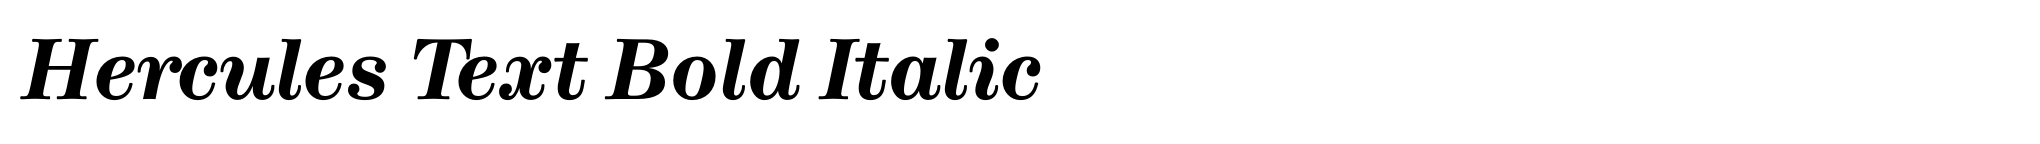 Hercules Text Bold Italic image